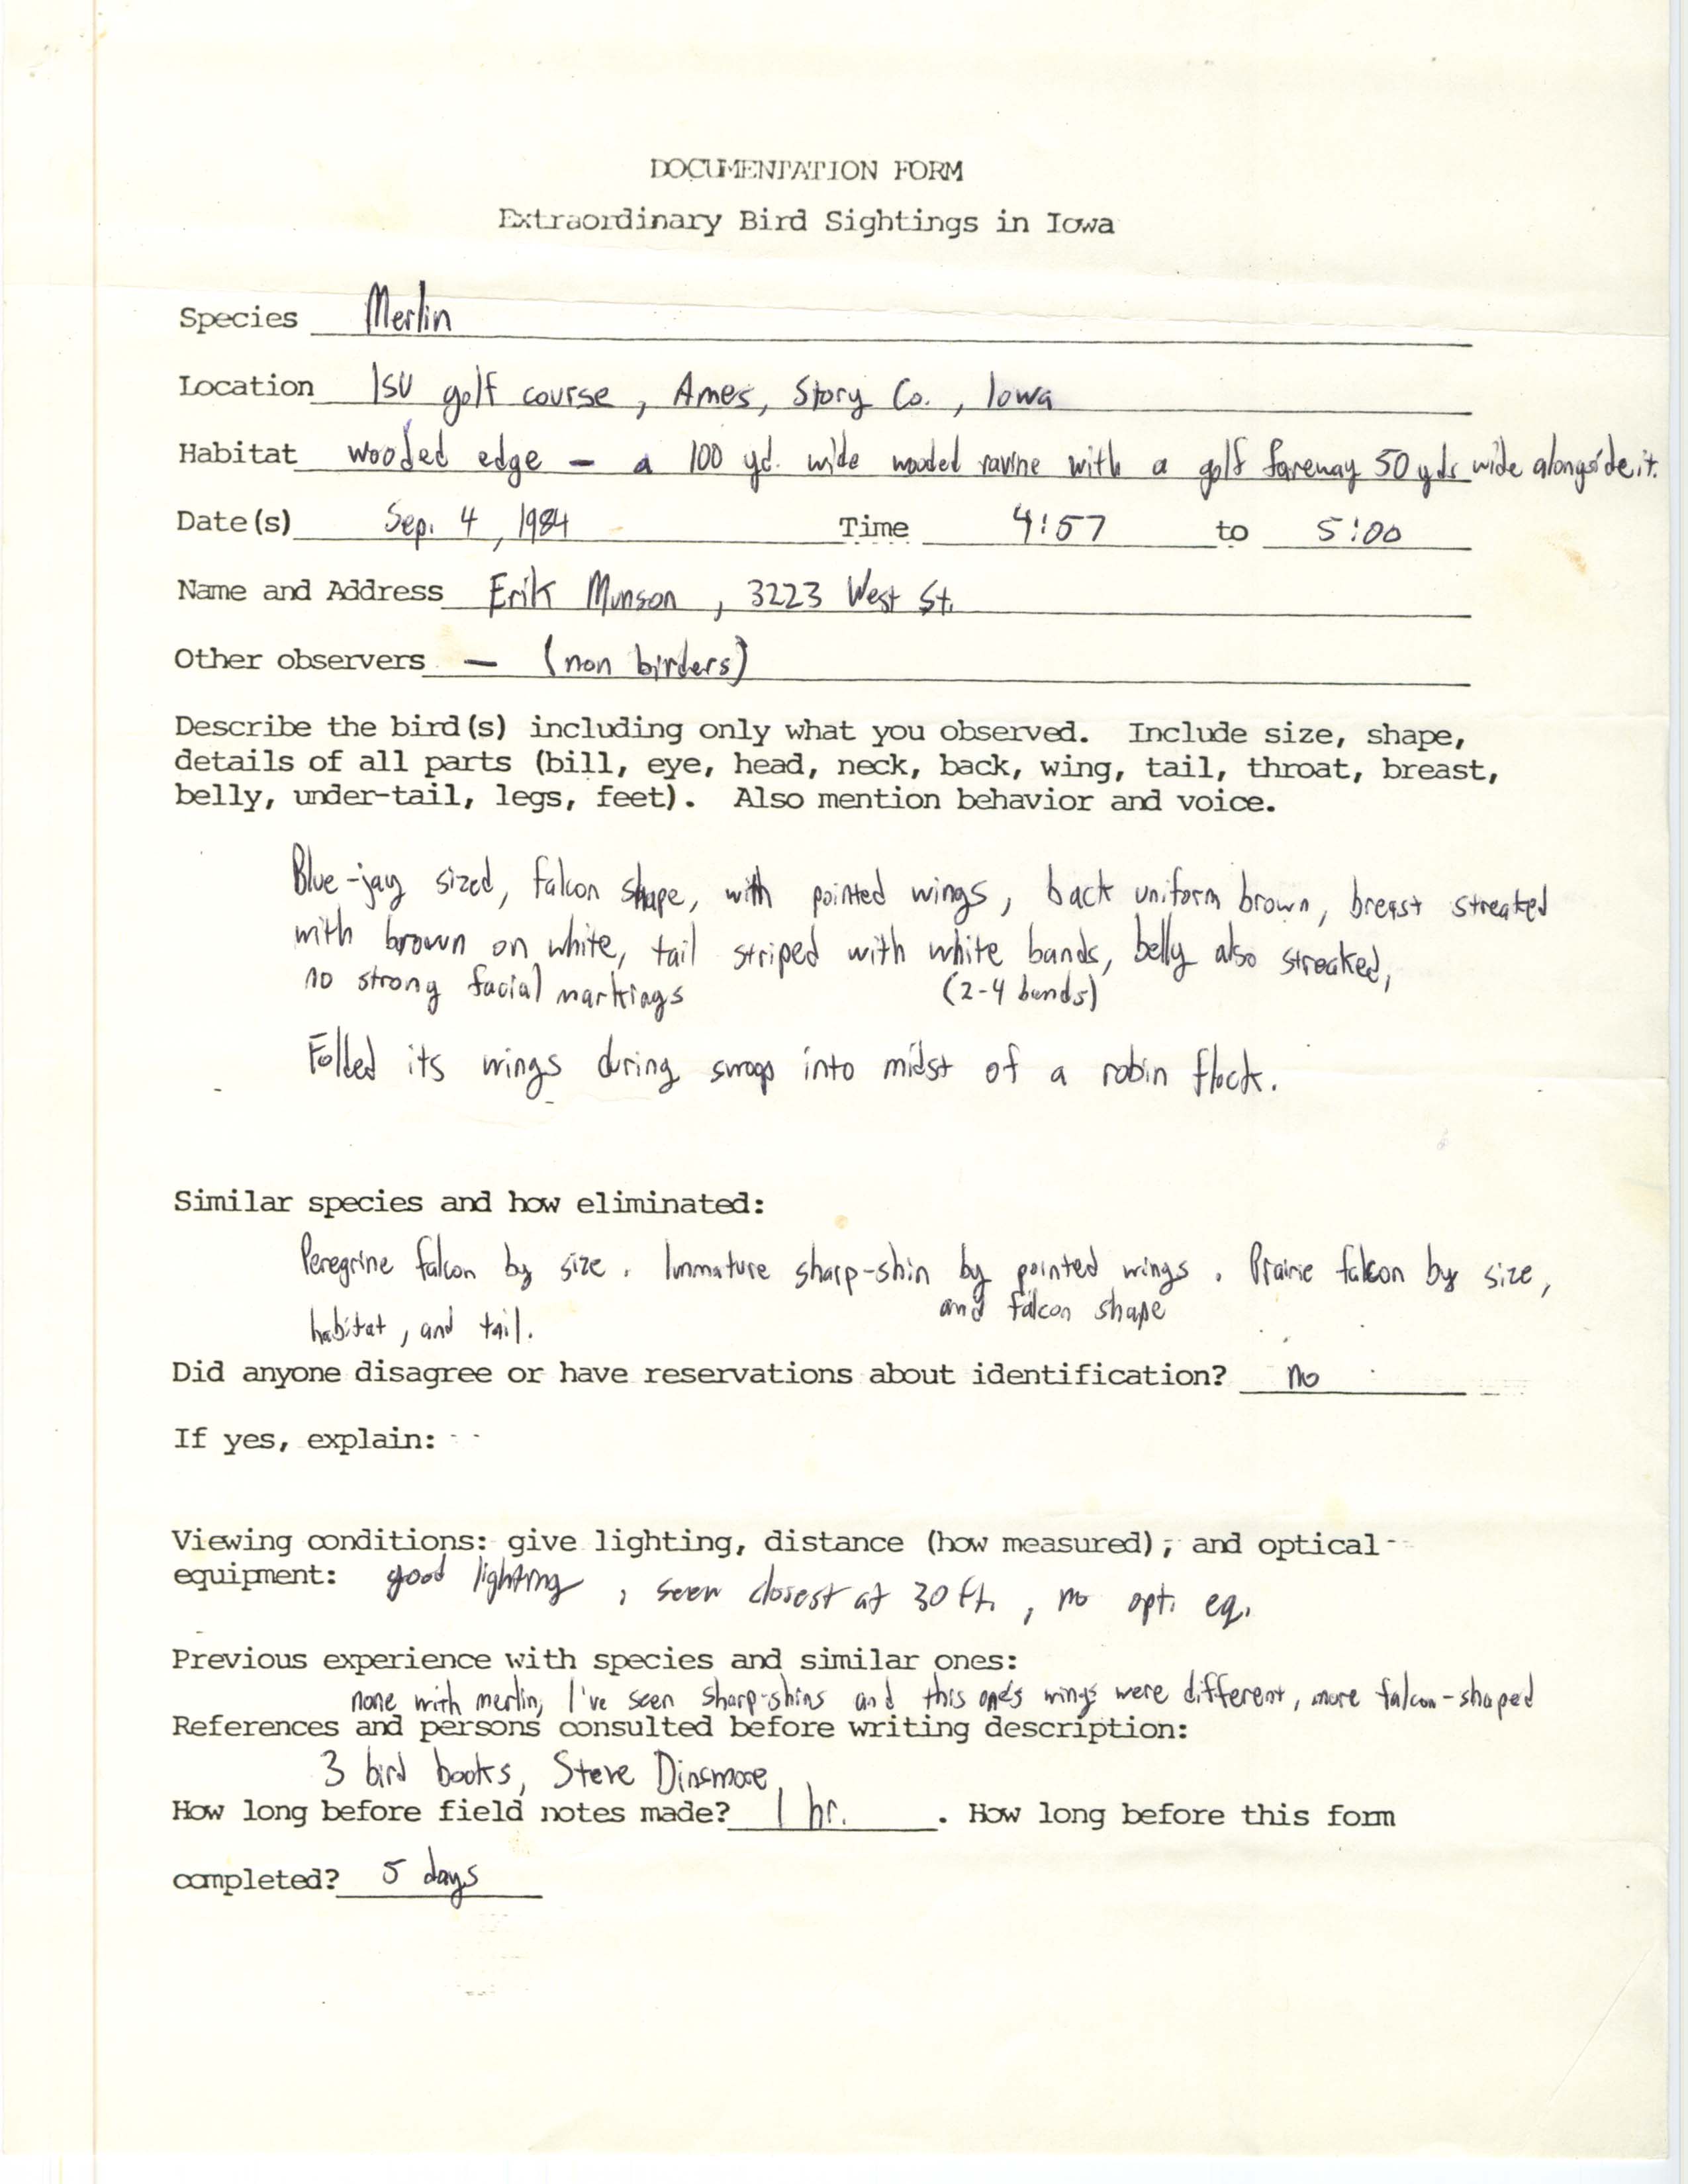 Rare bird documentation form for Merlin at ISU golf course, 1984